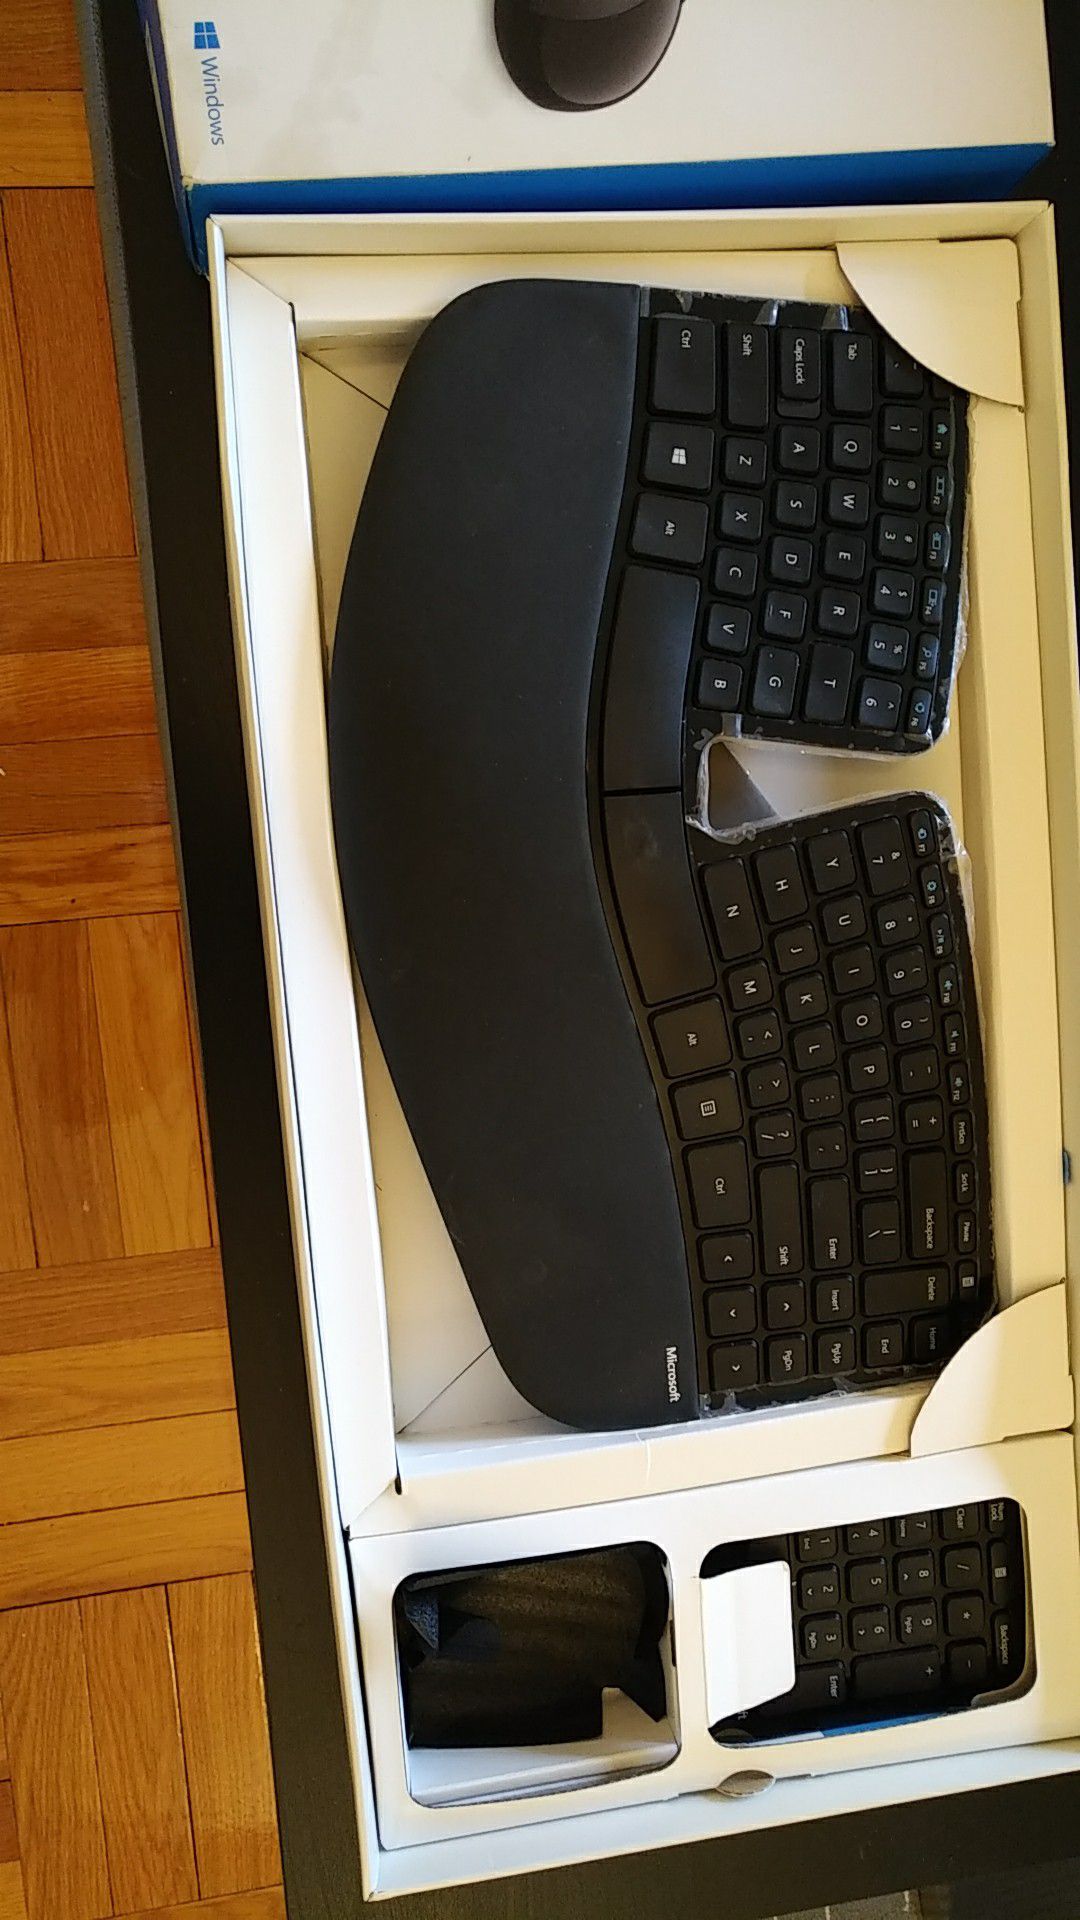 Microsoft Sculpt Ergonomic Keyboard, keypad, but no mouse